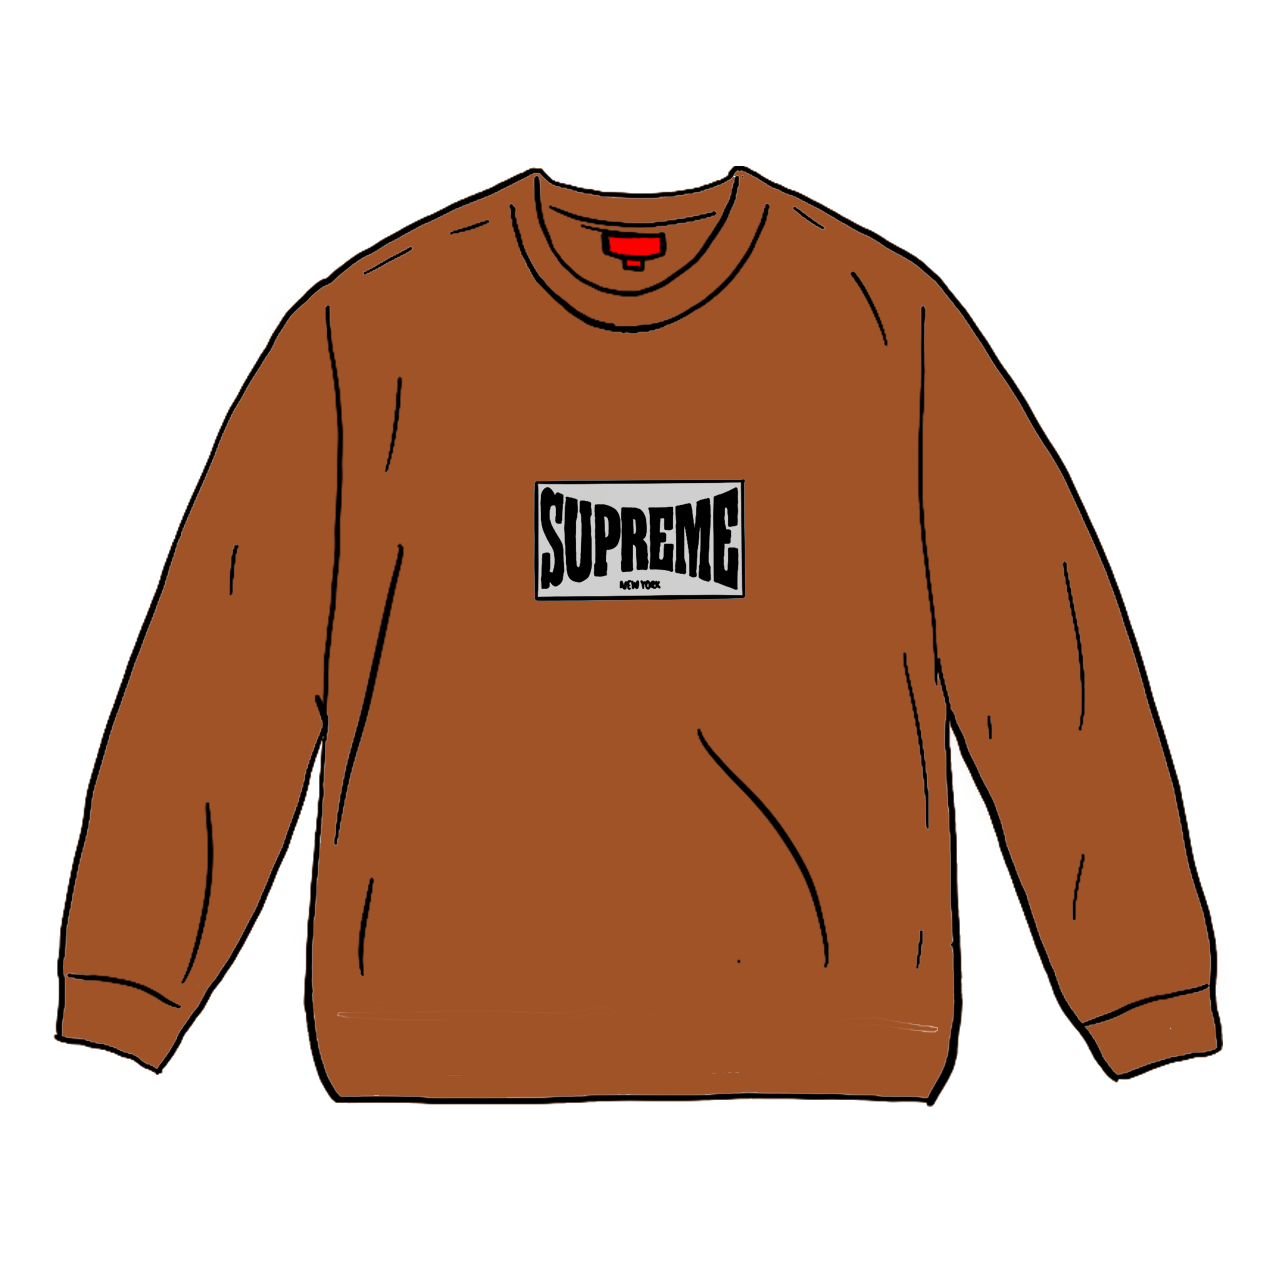 Tシャツ/カットソー(七分/長袖)Supreme Woven Label L/S Top Rust ロンT |  mace.macecorporation.com - Tシャツ/カットソー(七分/長袖)